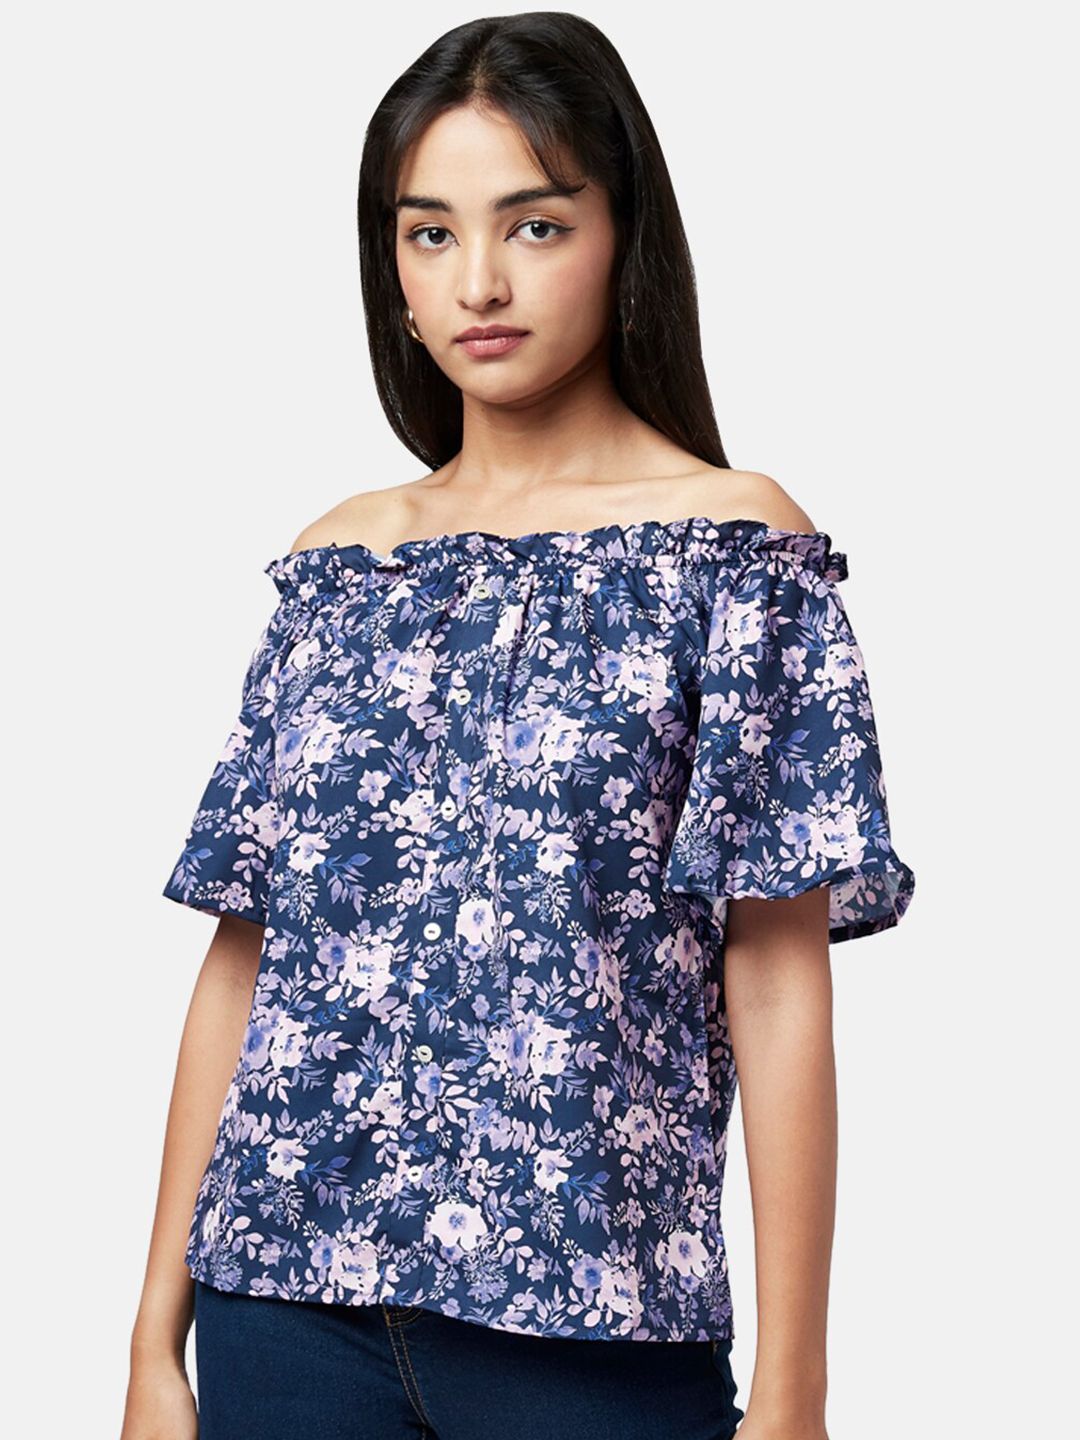 YU by Pantaloons Navy Blue Floral Print Off-Shoulder Bardot Top Price in India